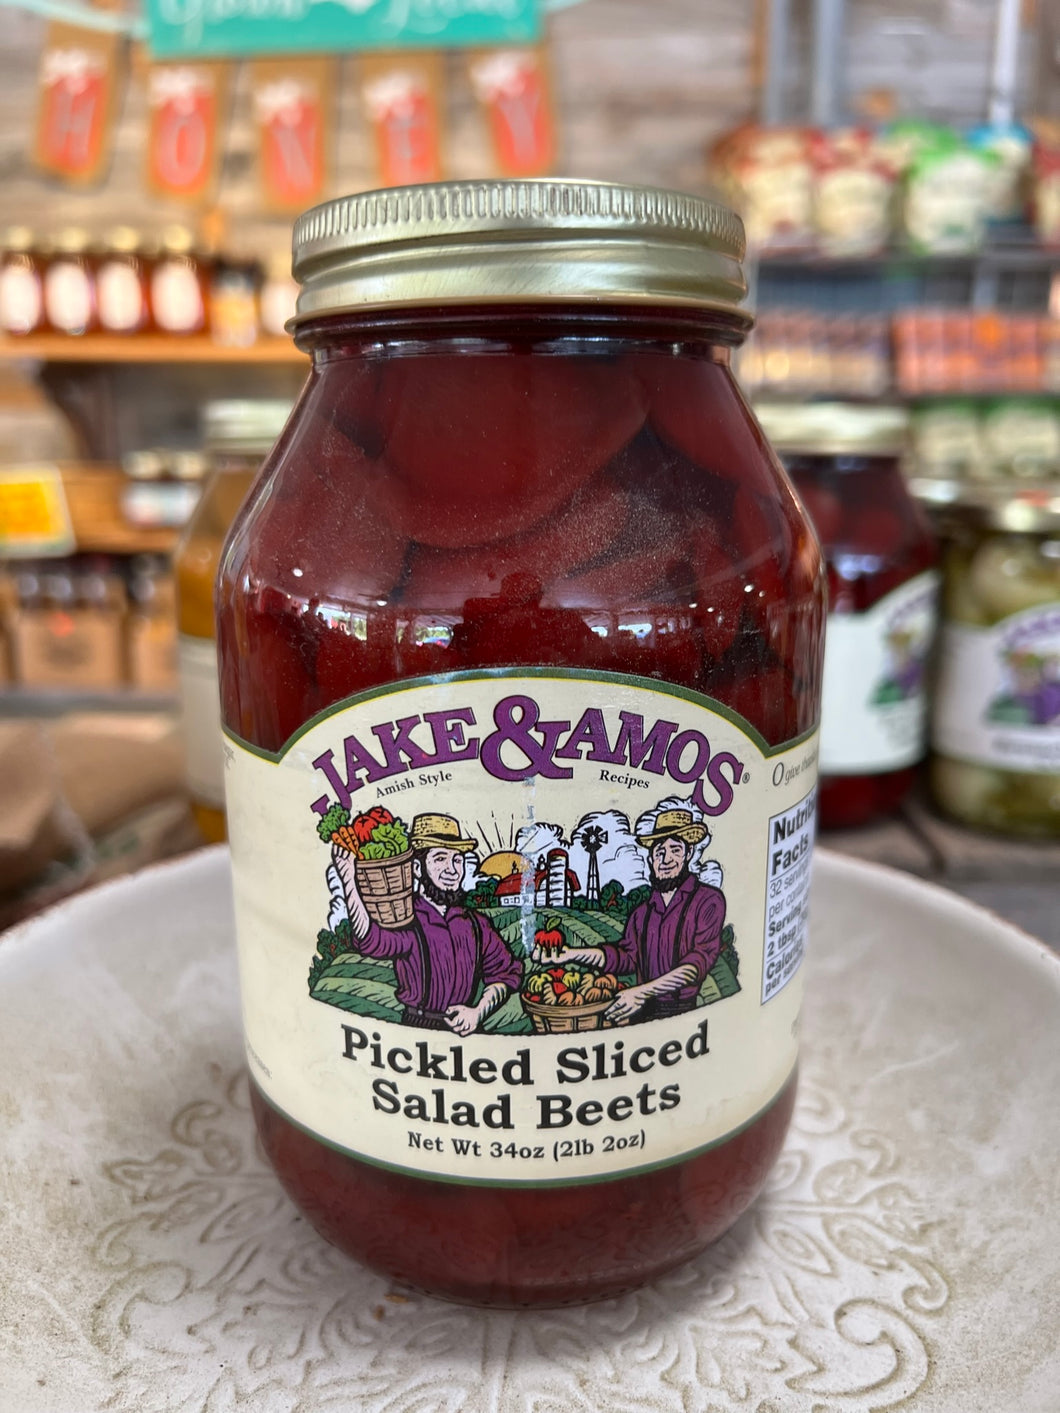 Jake and Amos Pickled Sliced Salad Beets